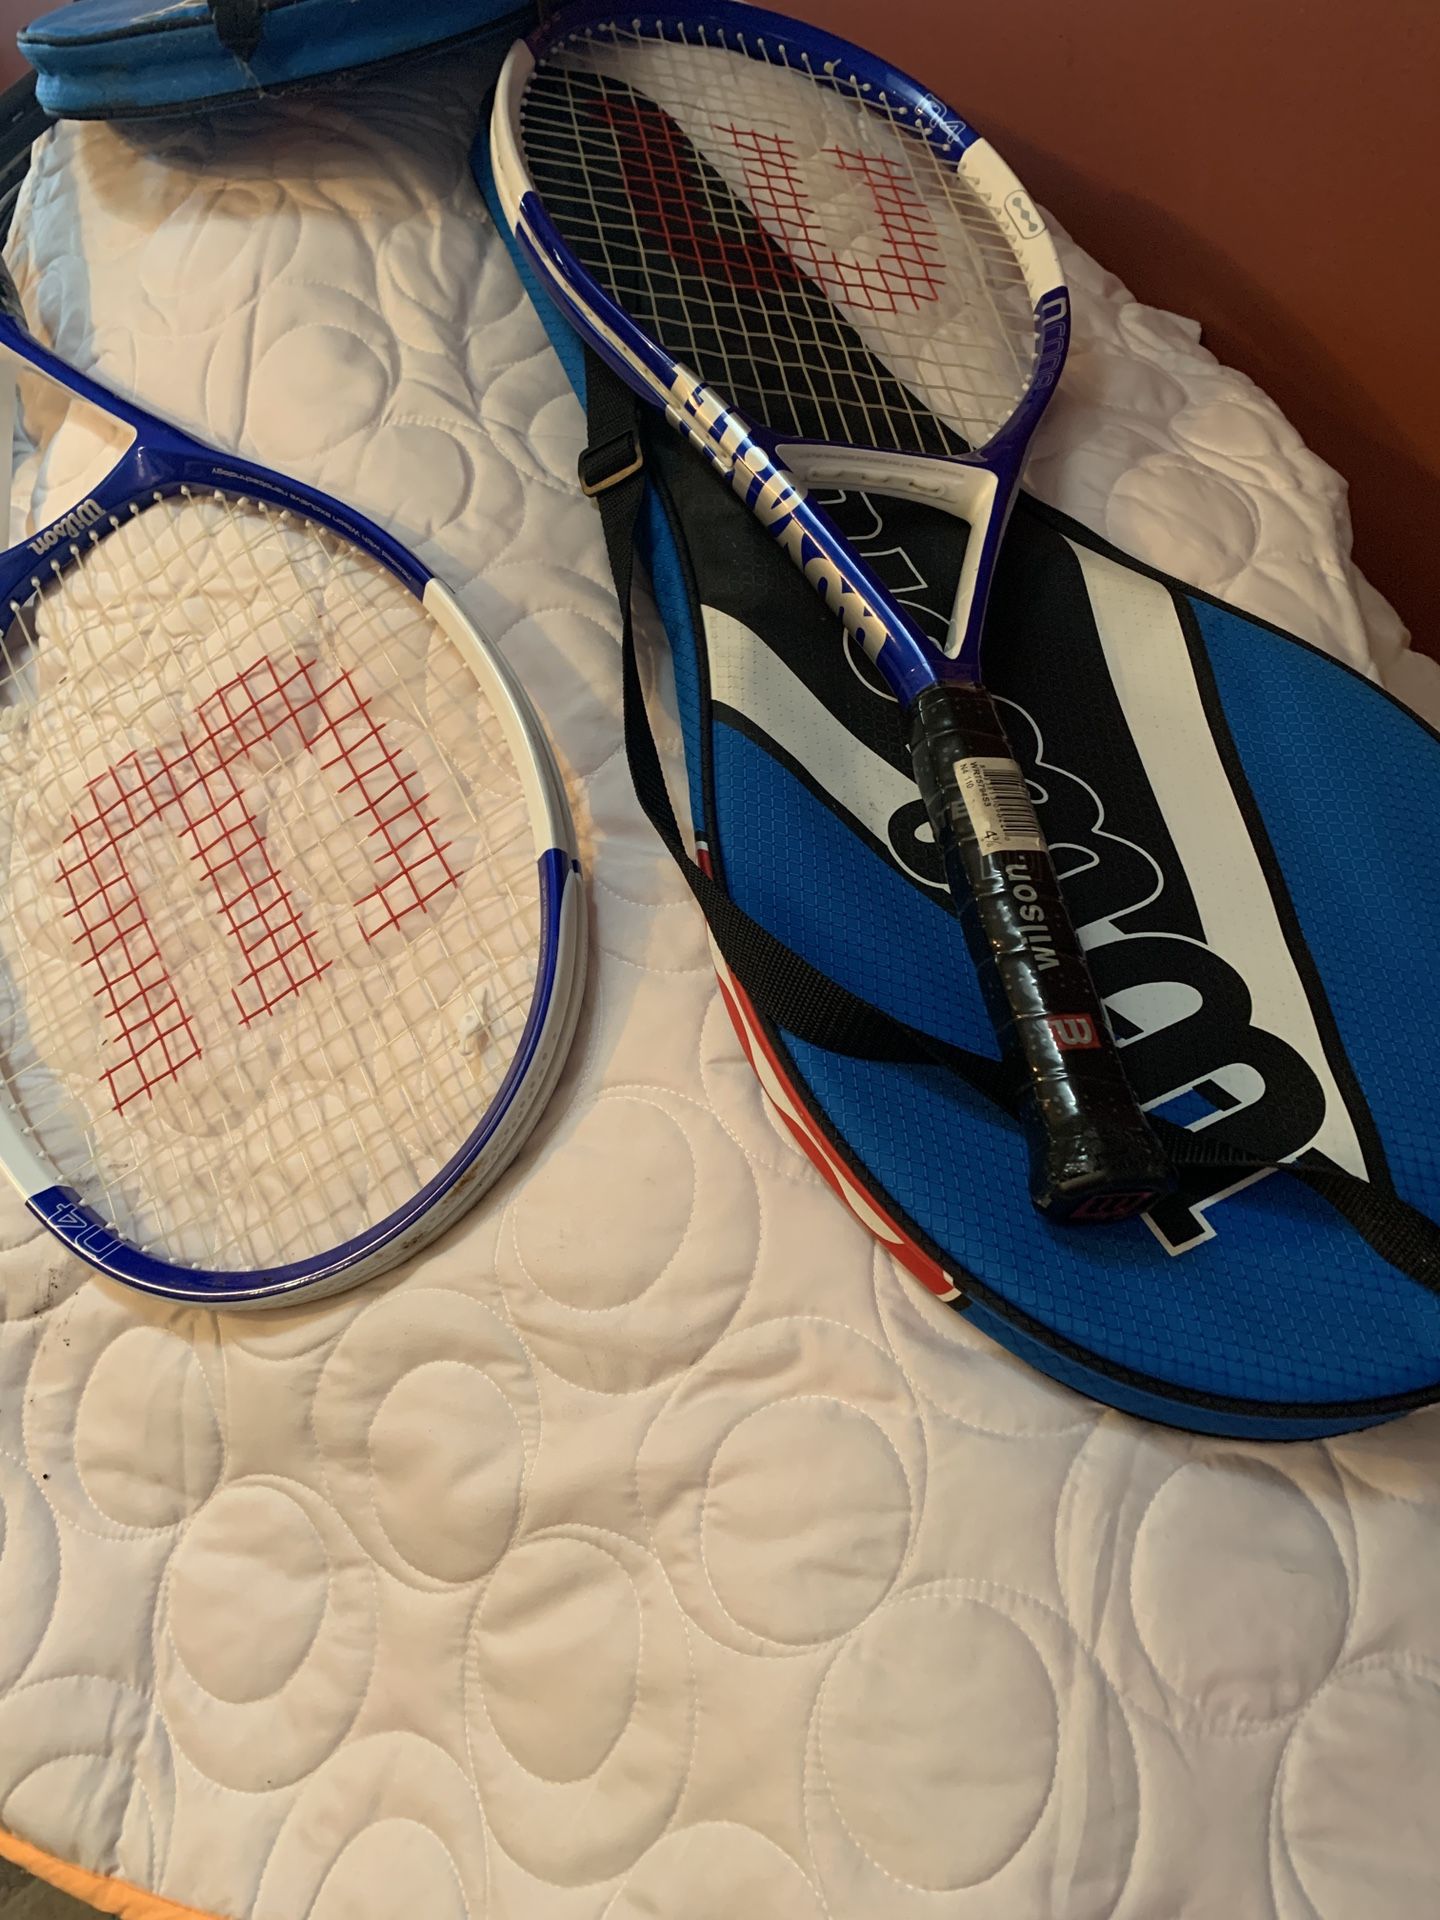 Tennis rackets, Wilson & Head